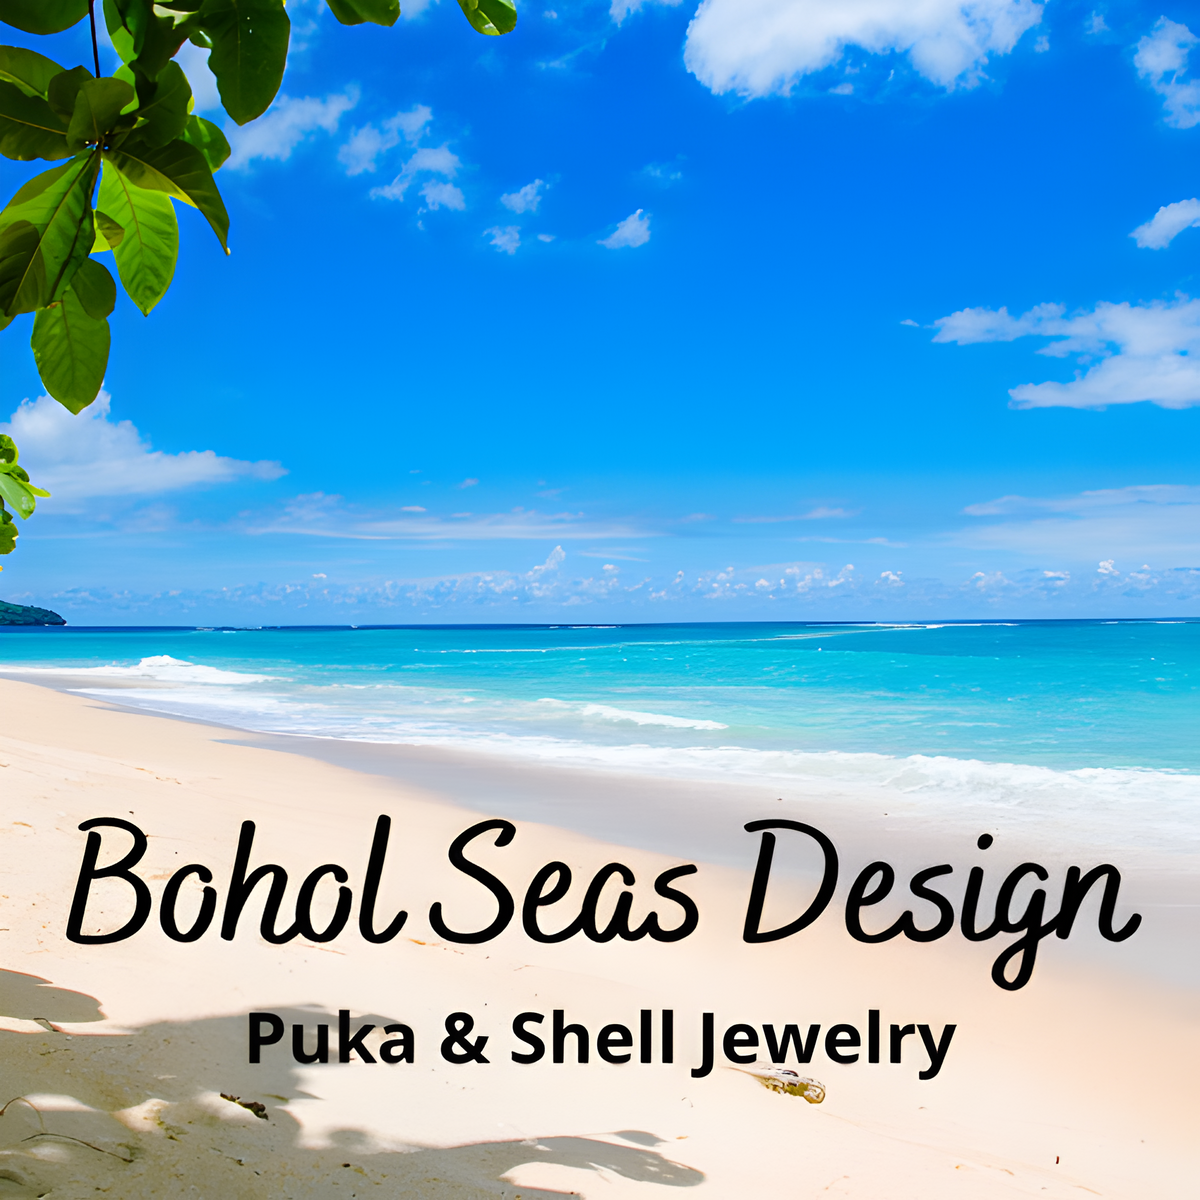 Bohol Seas Design